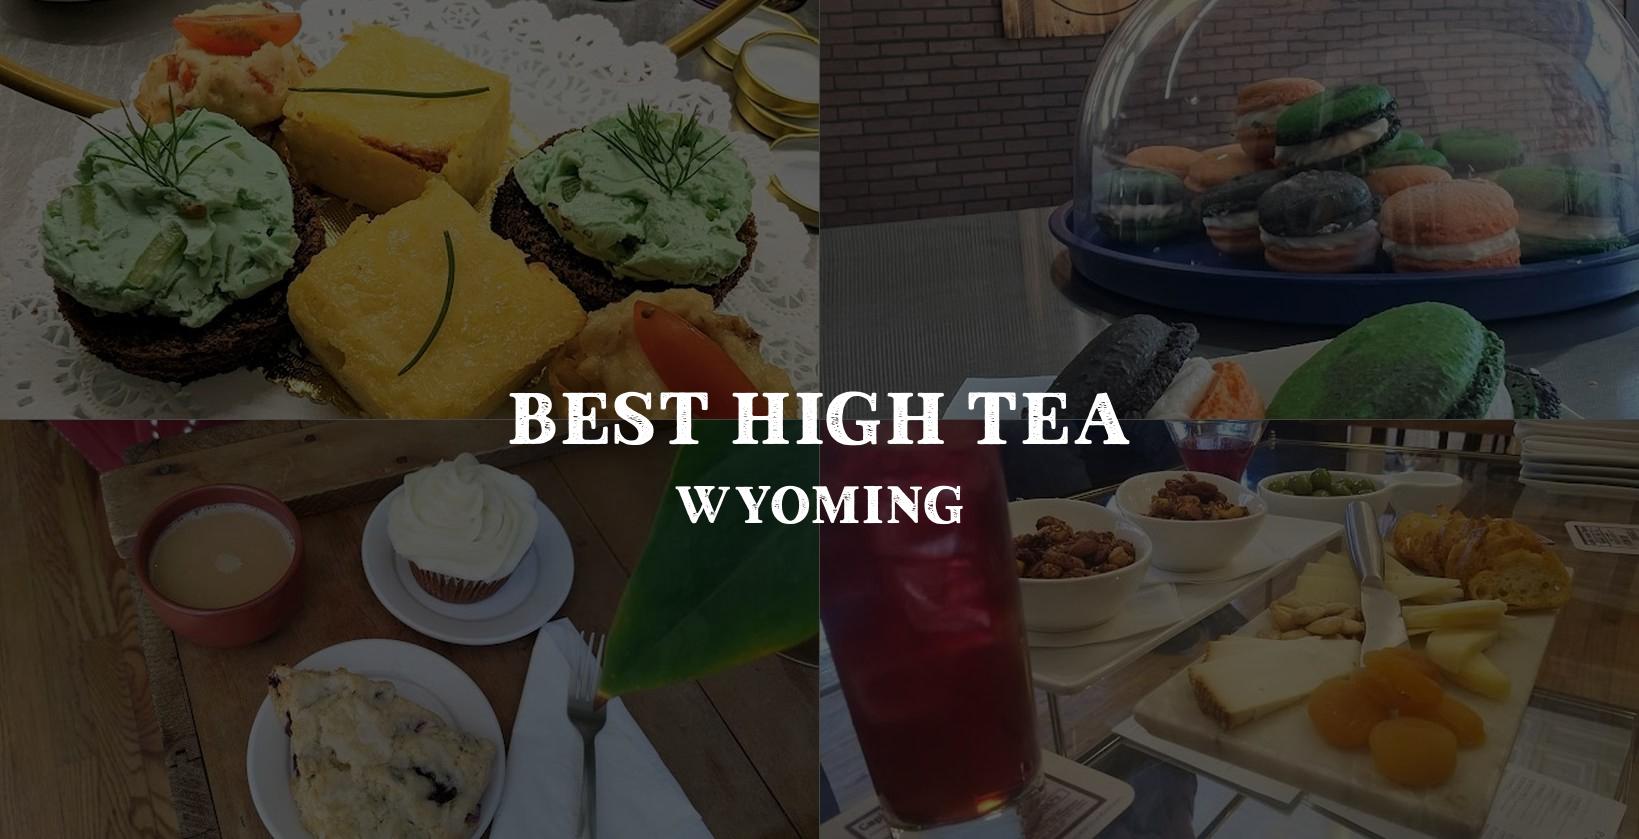 Top High Tea in Wyoming